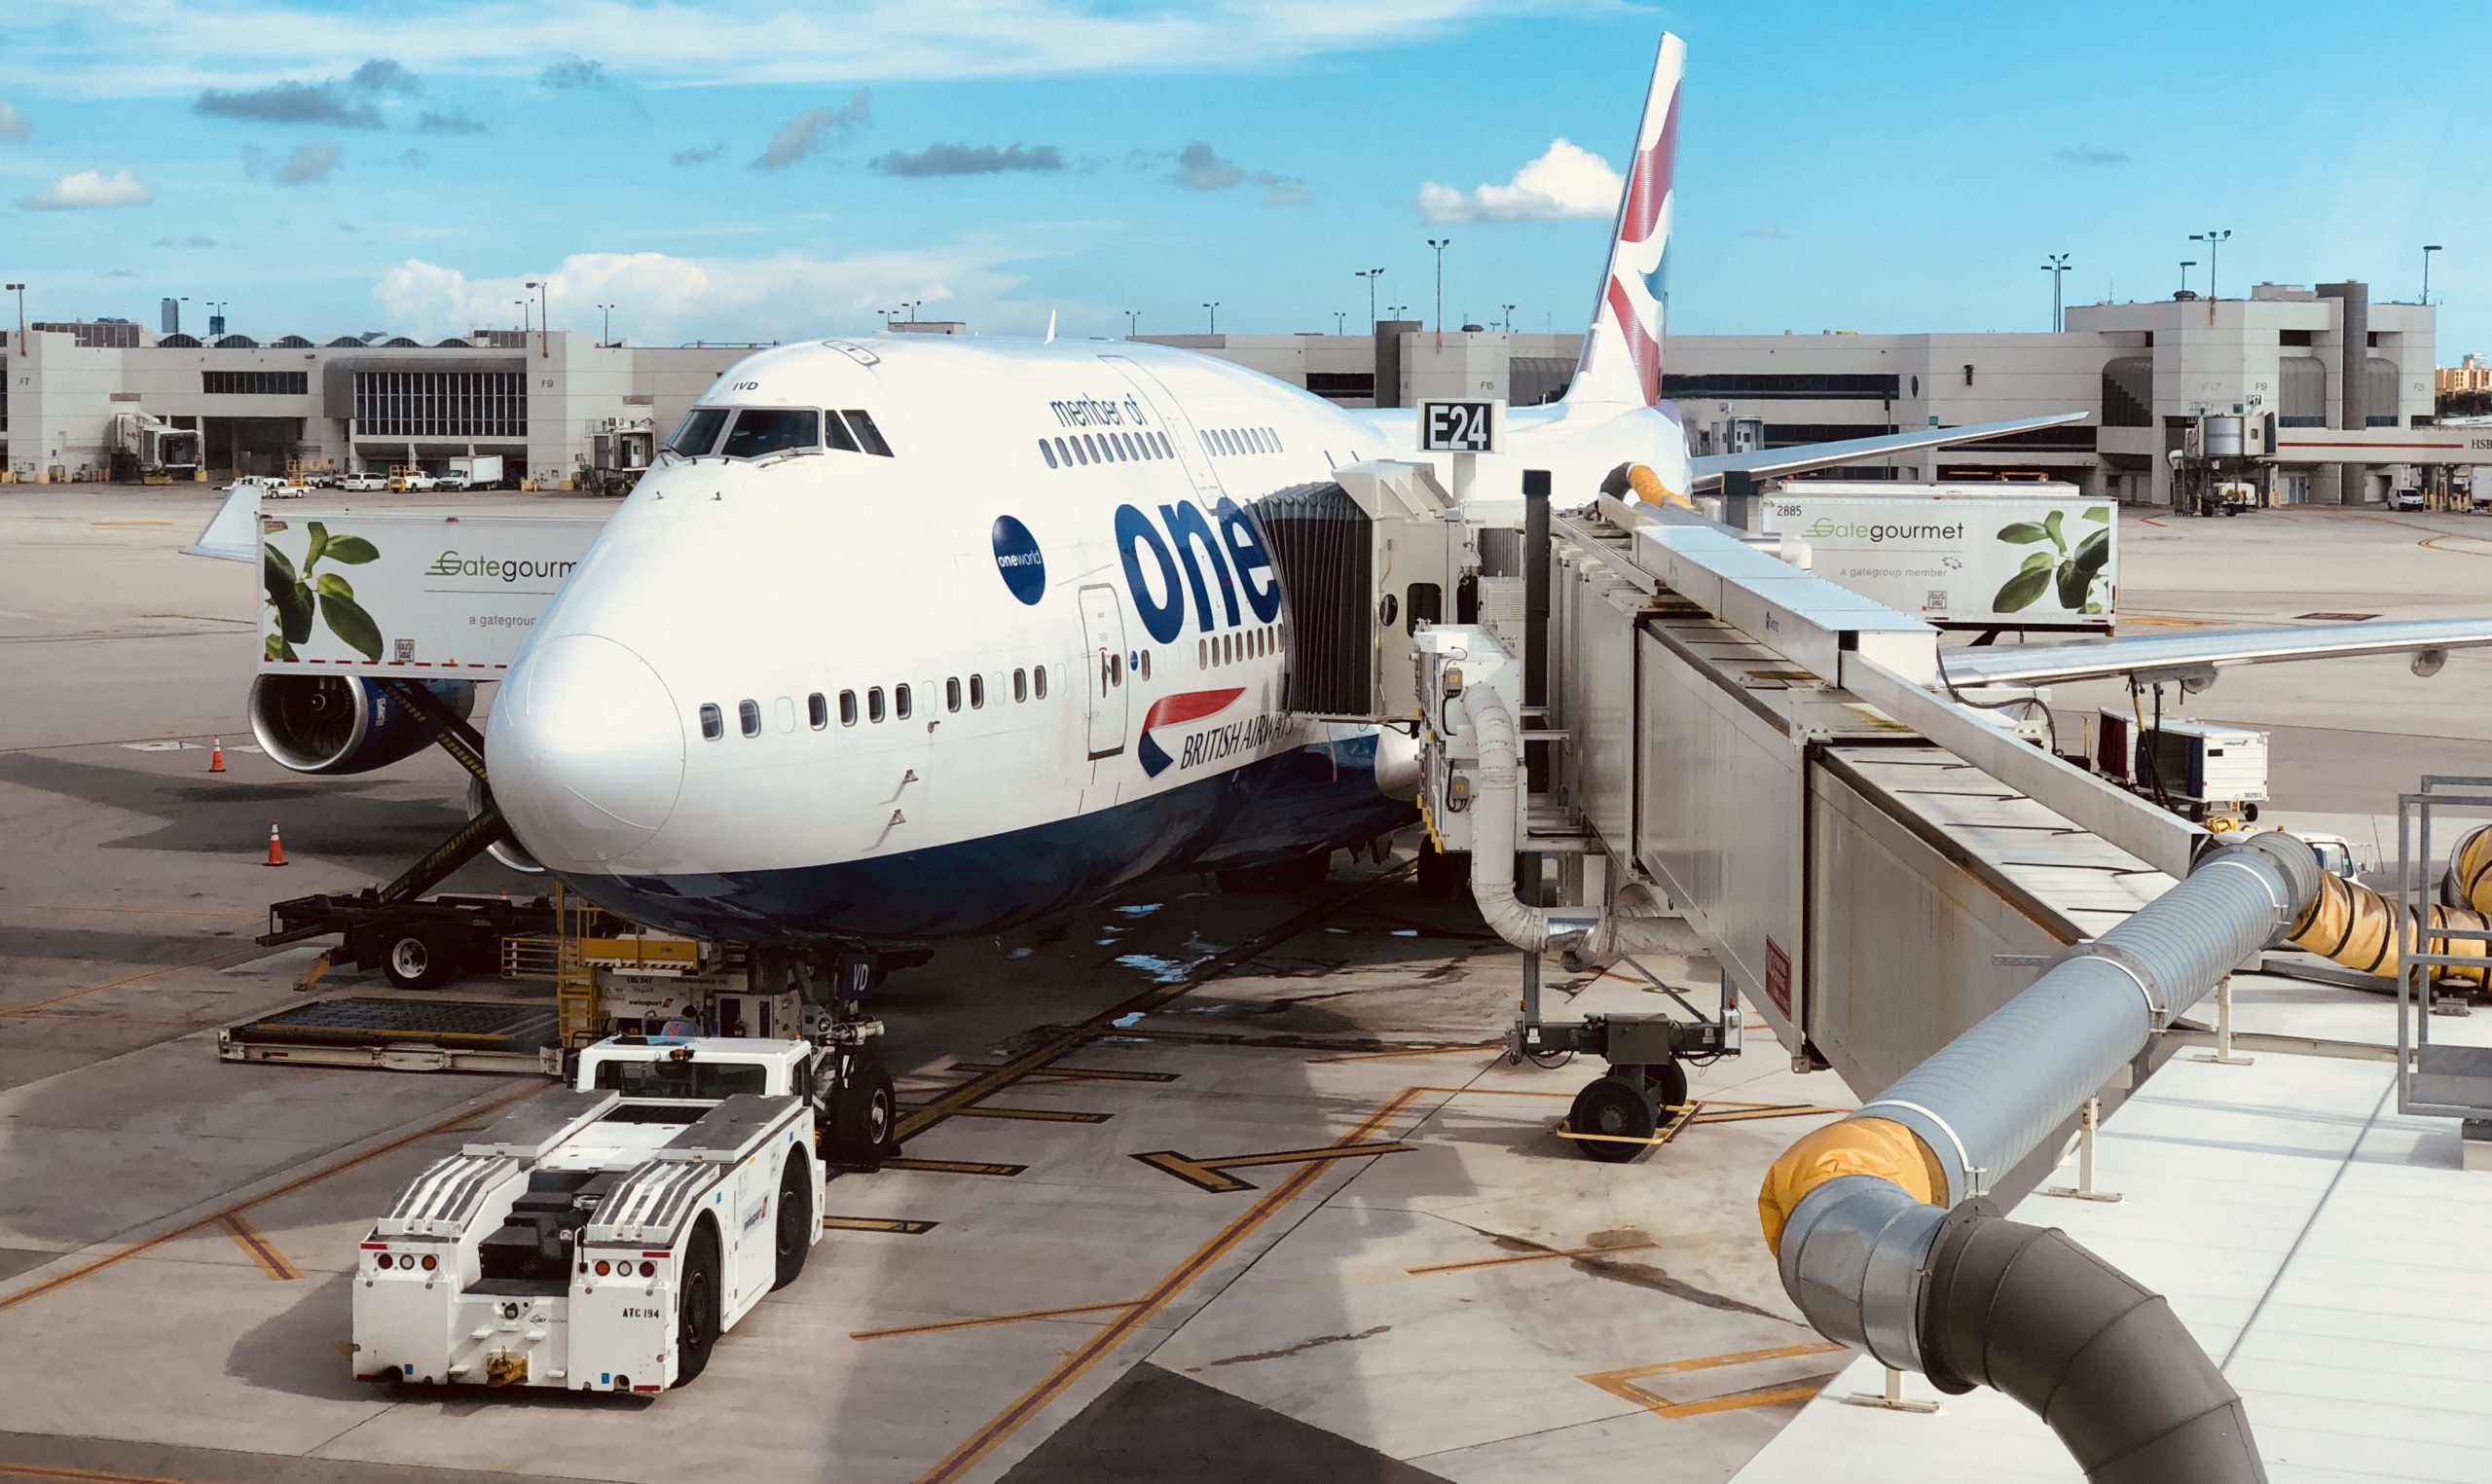 British Airways 747-400 at Miami International Airport